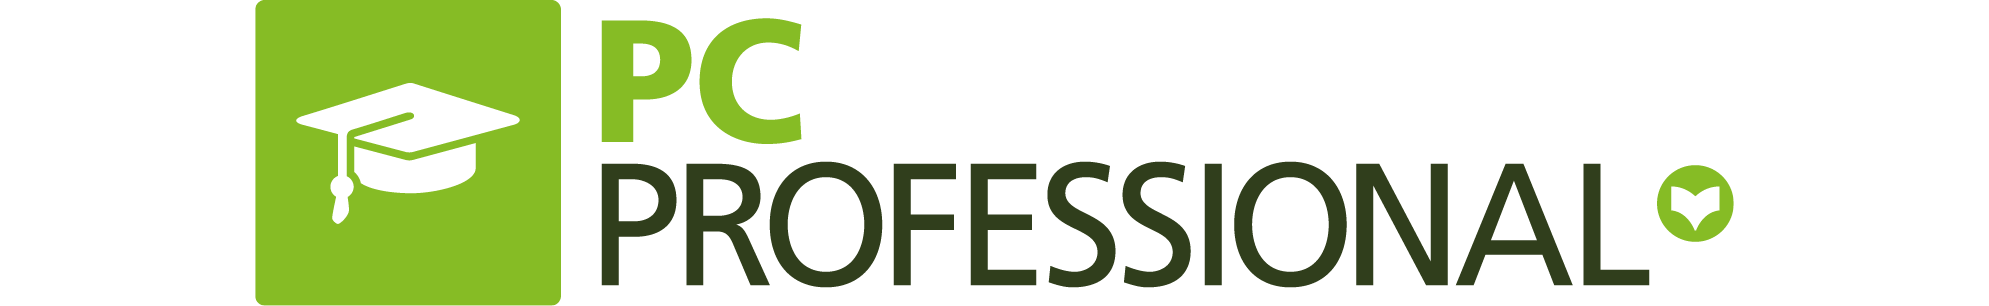 PC Professional Logo